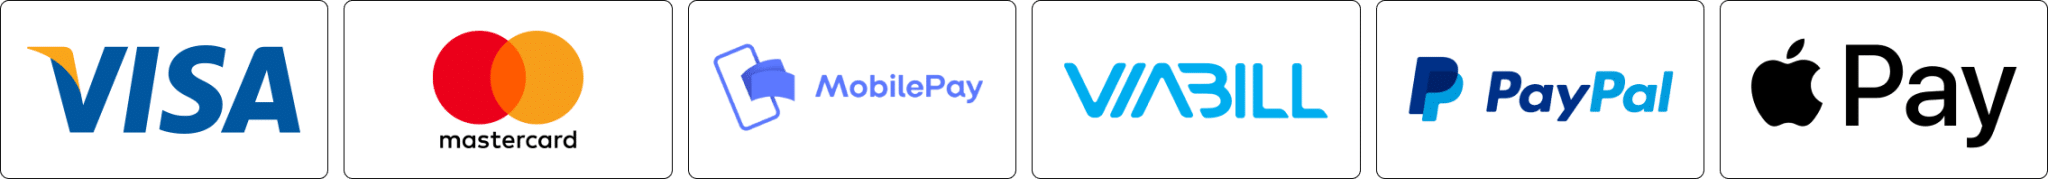 myskin payment options